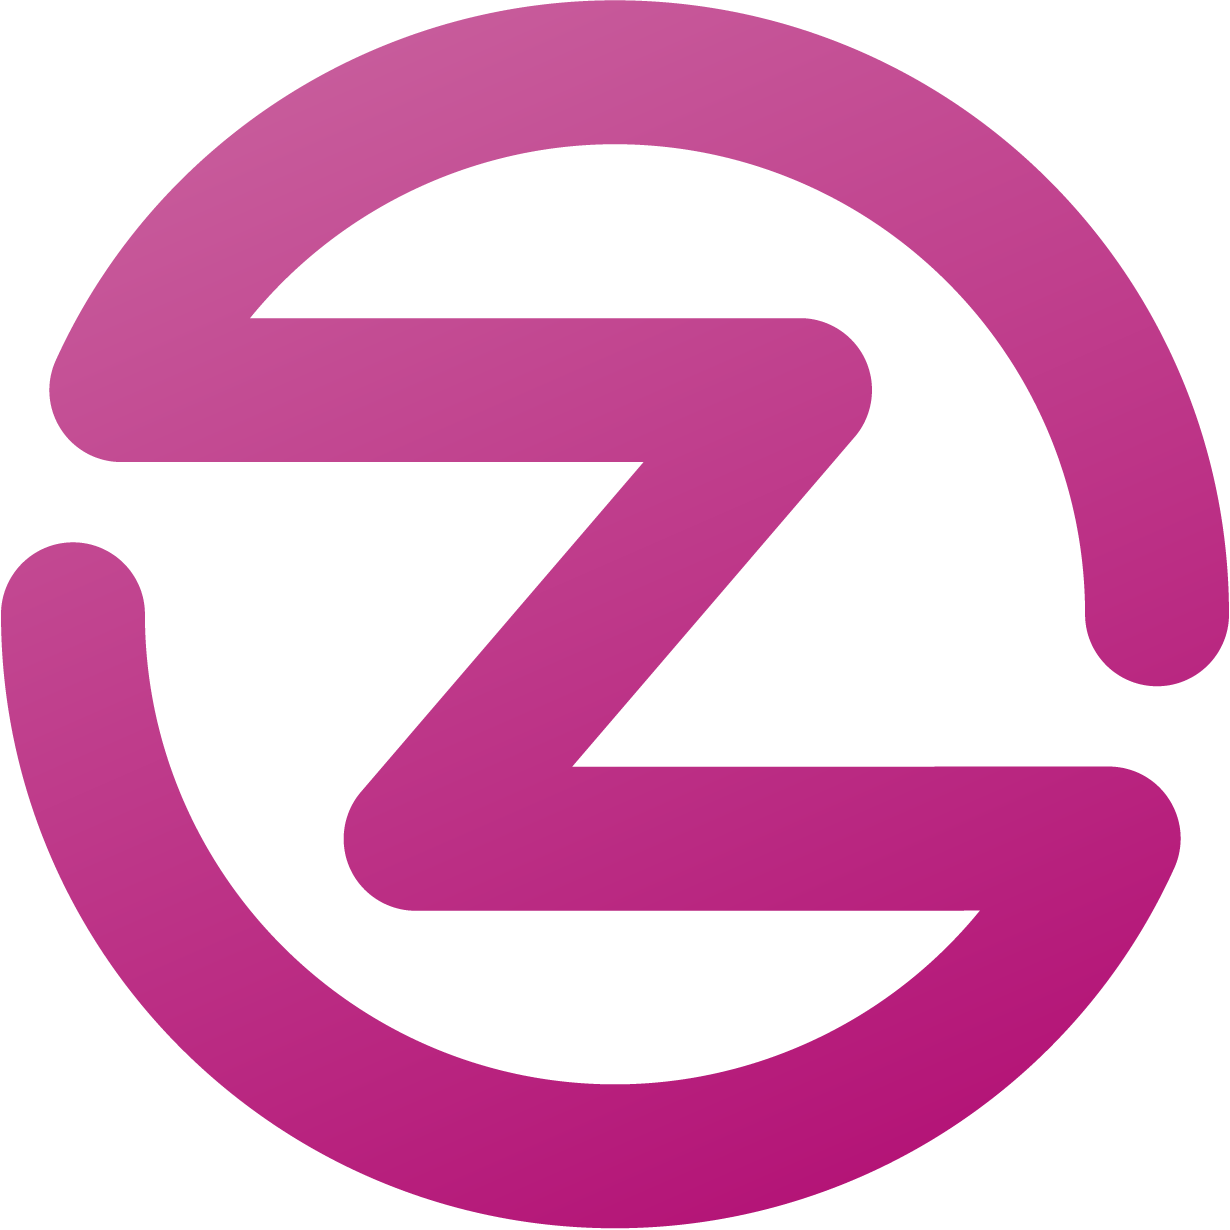 Le symbole Zoomit